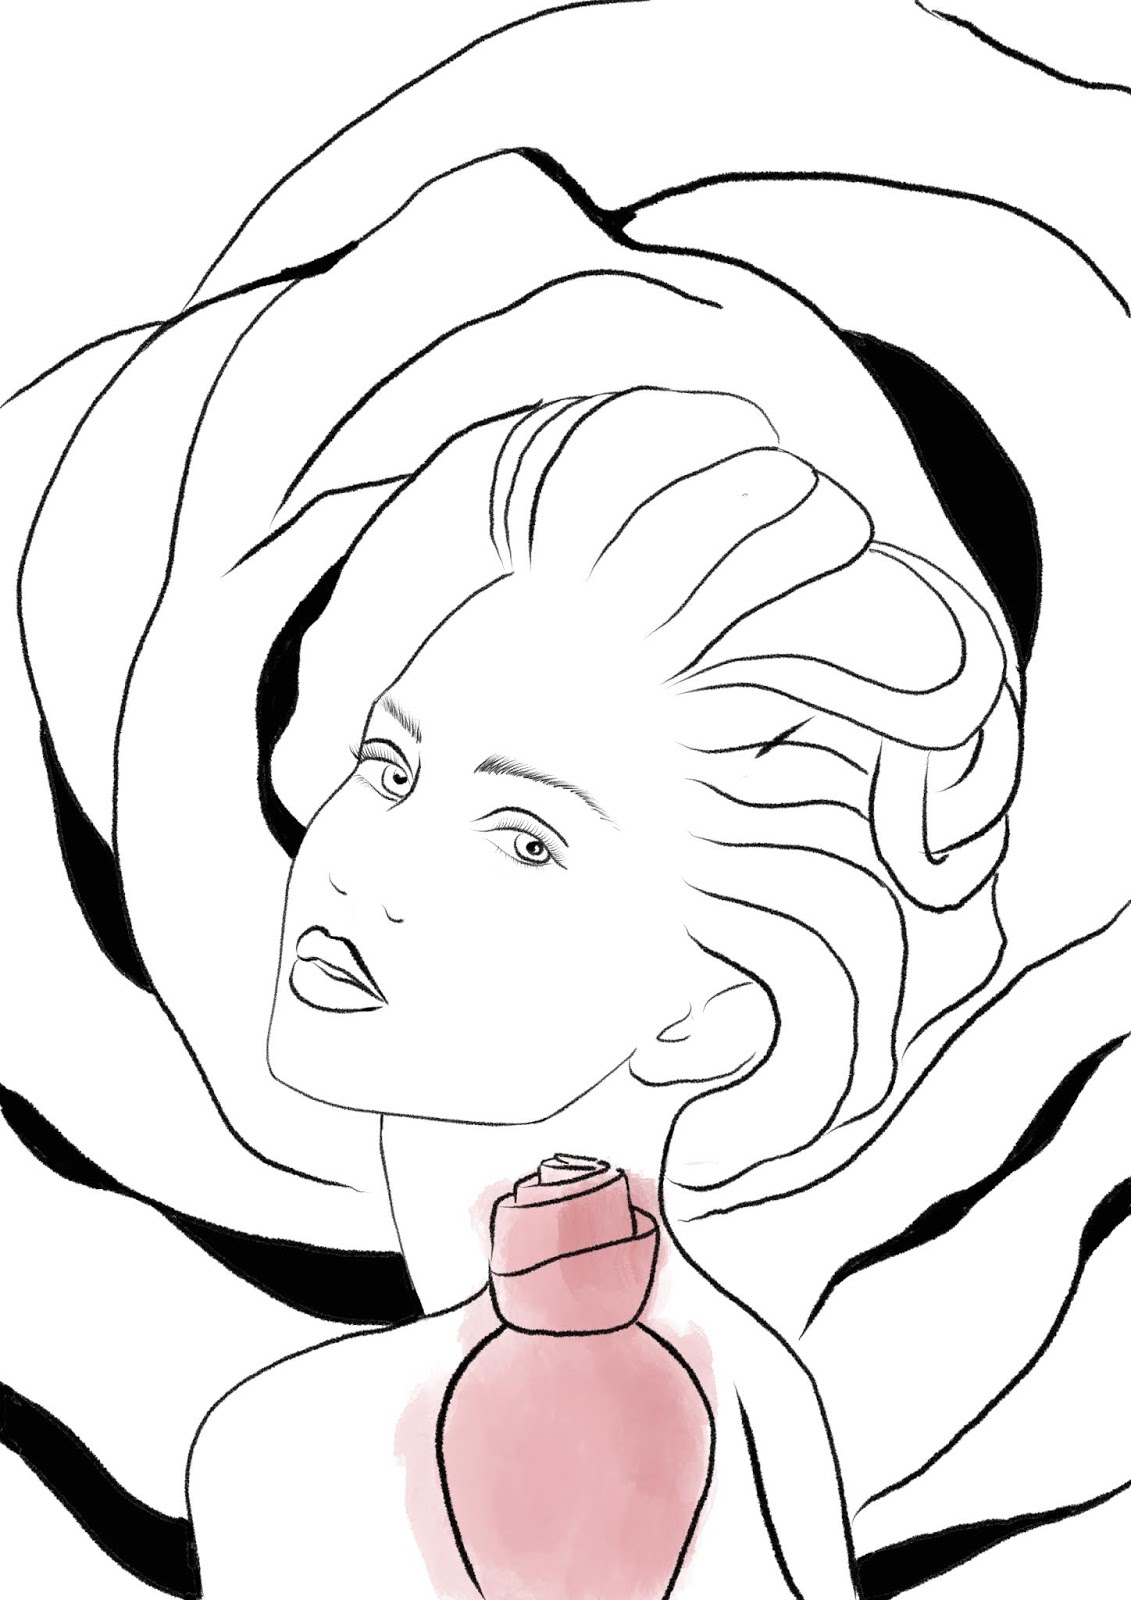 perfume ad illustration by Stella Visual